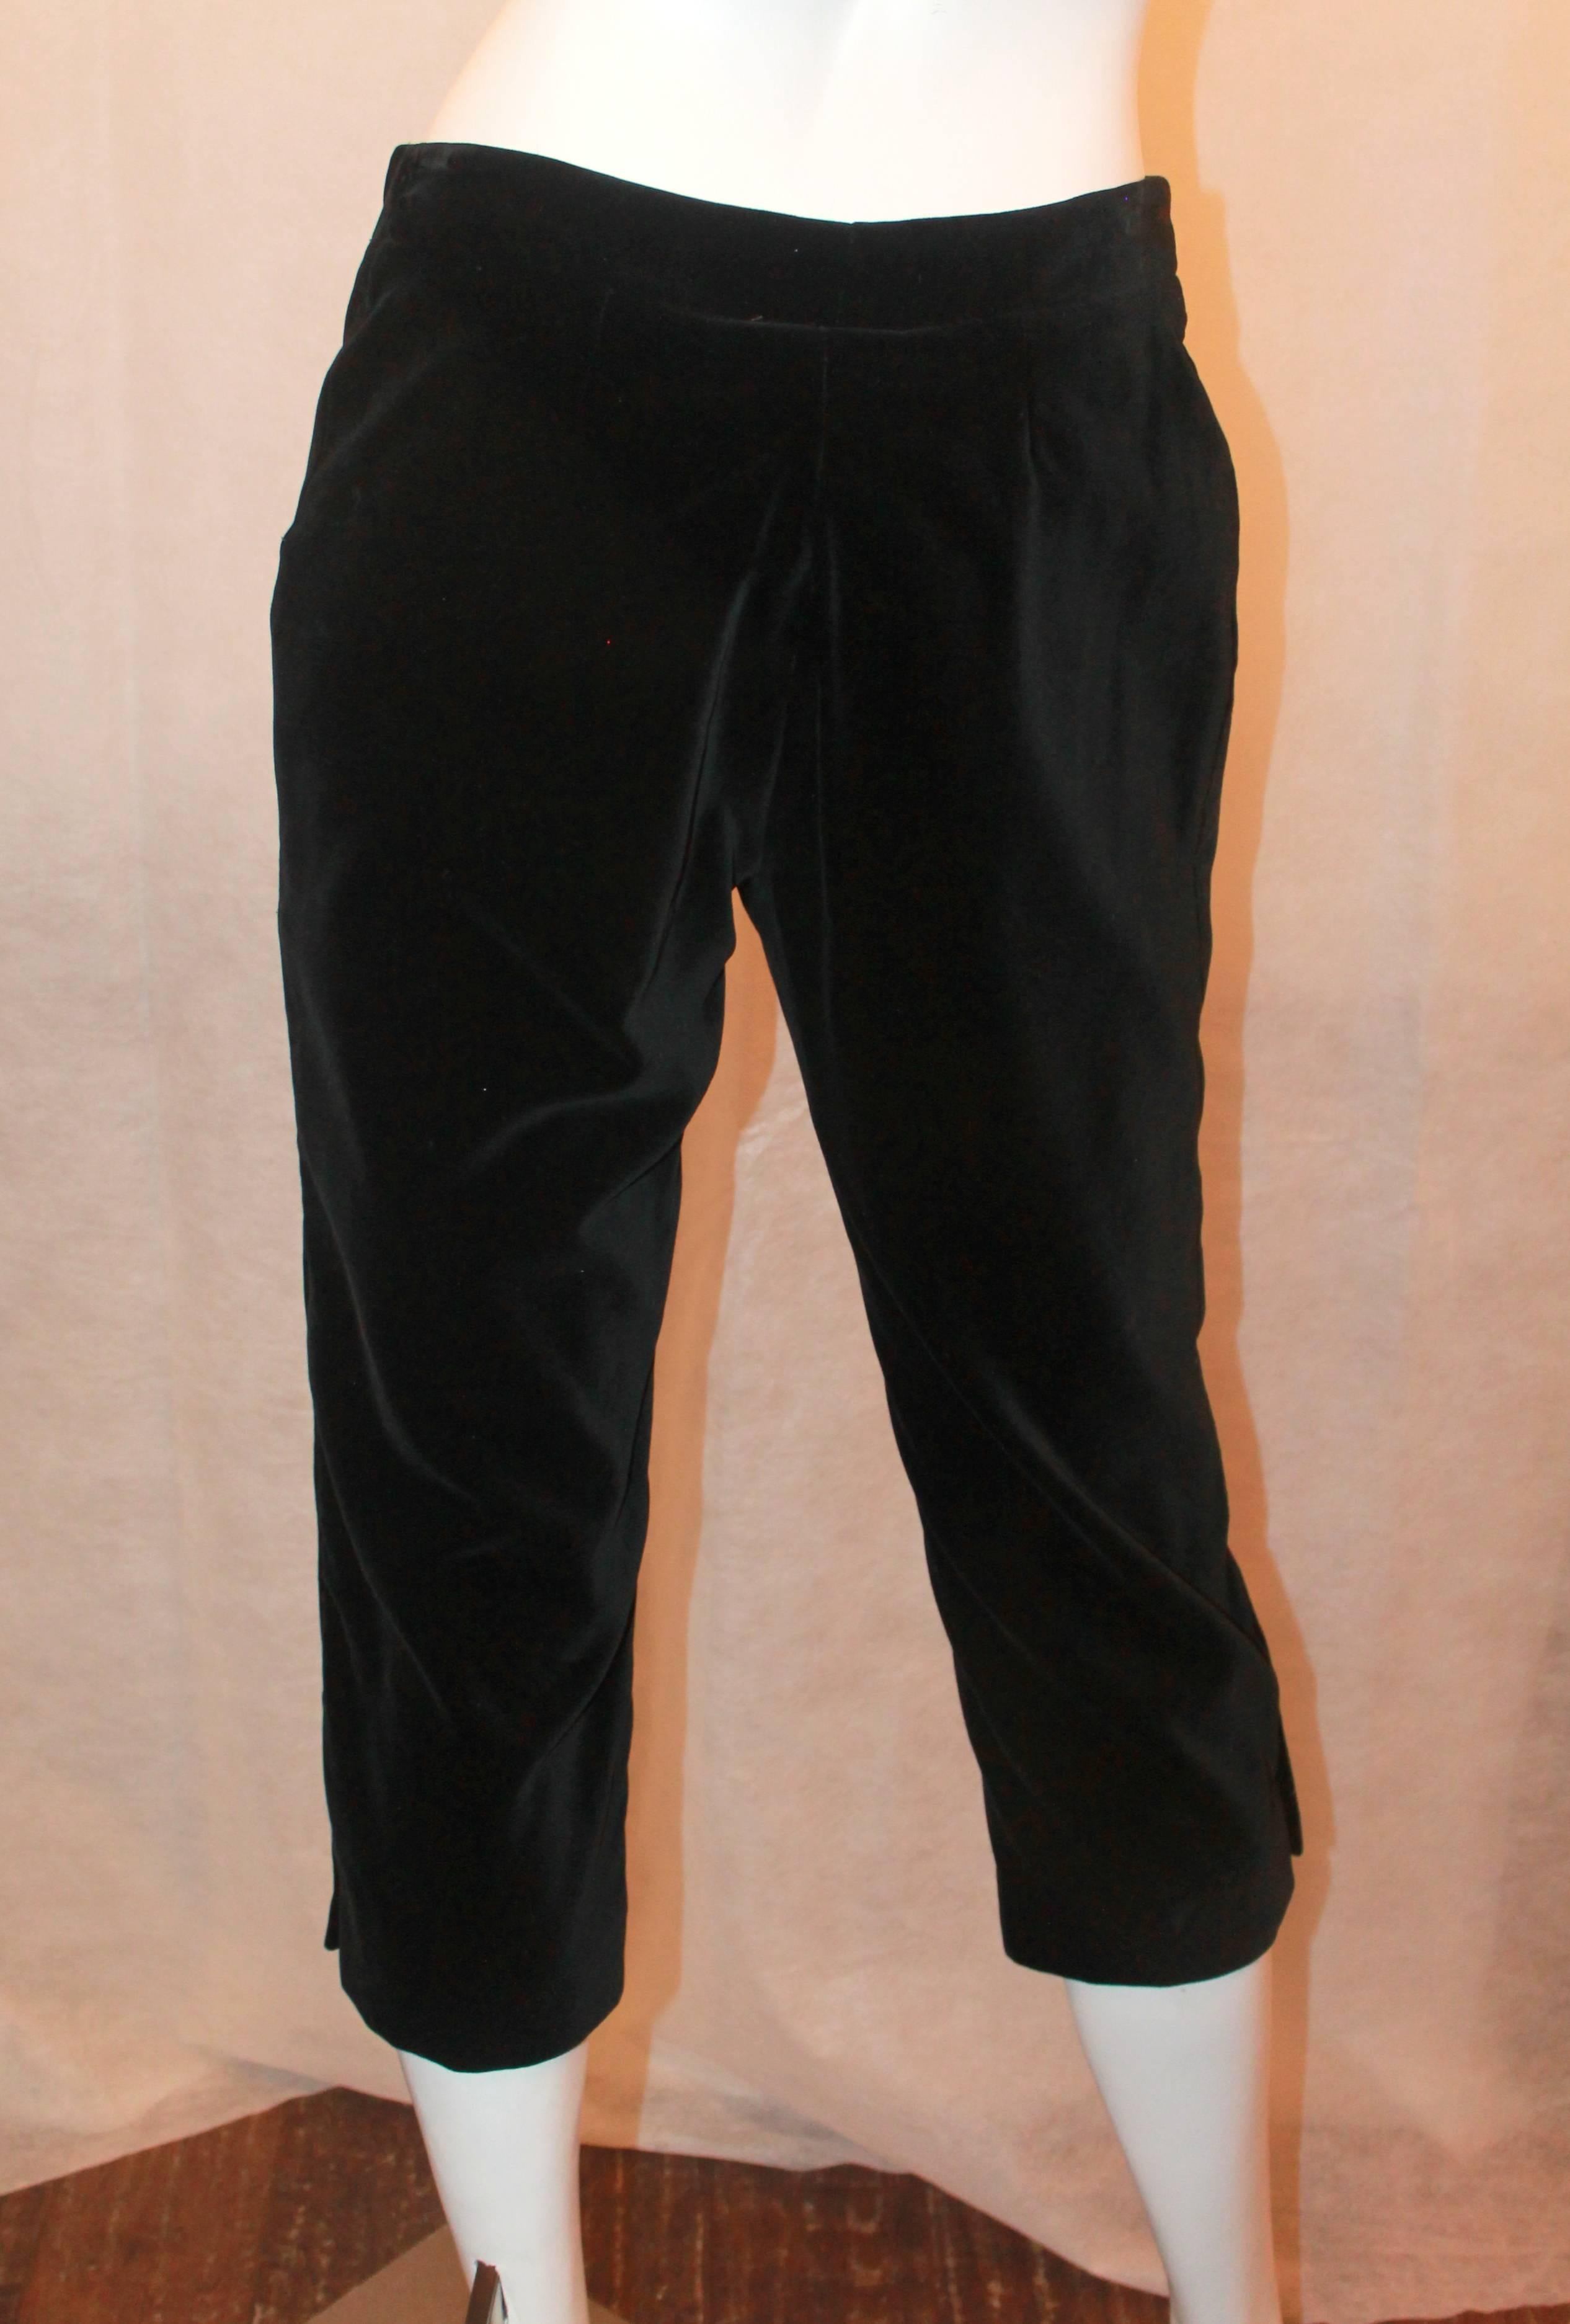 Women's Chanel Black Velvet Cropped Pants w/ Front Zip - 42 - 2005